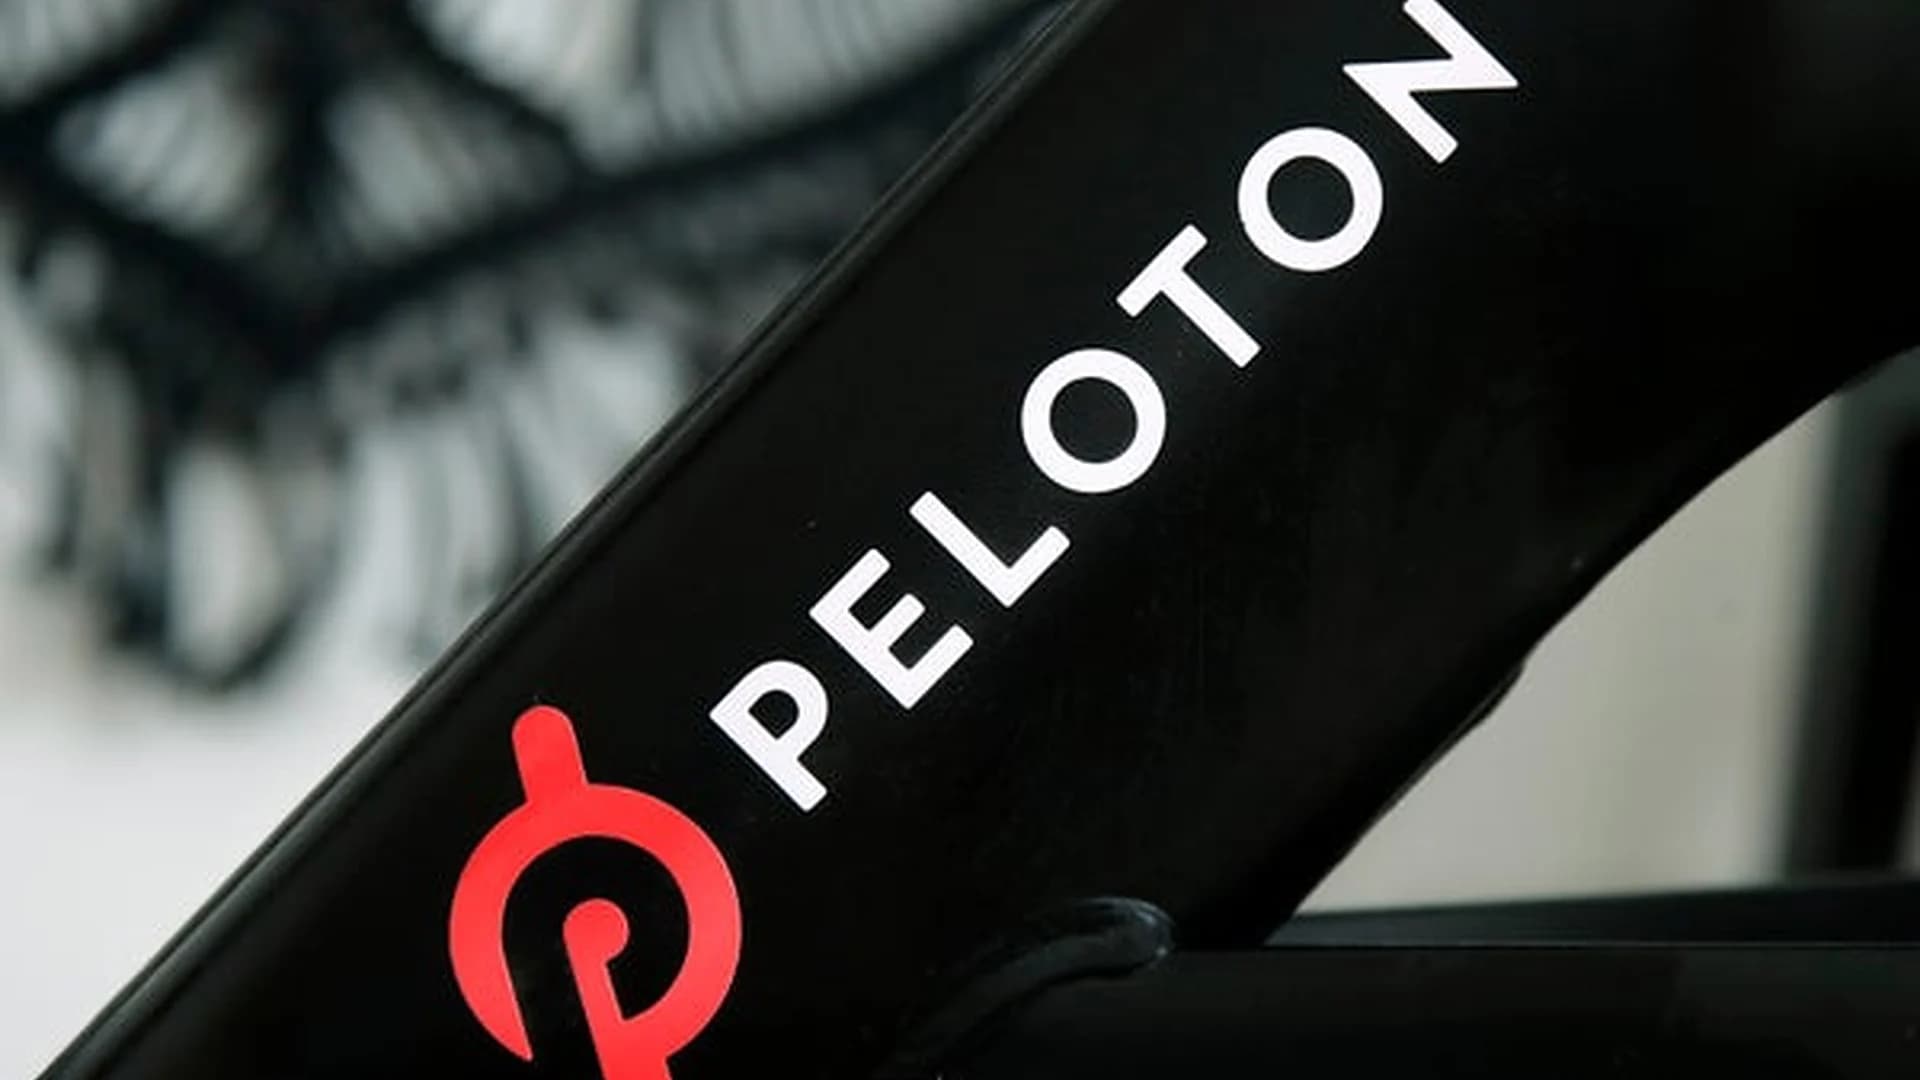 After child dies, US regulator warns about Peloton treadmill